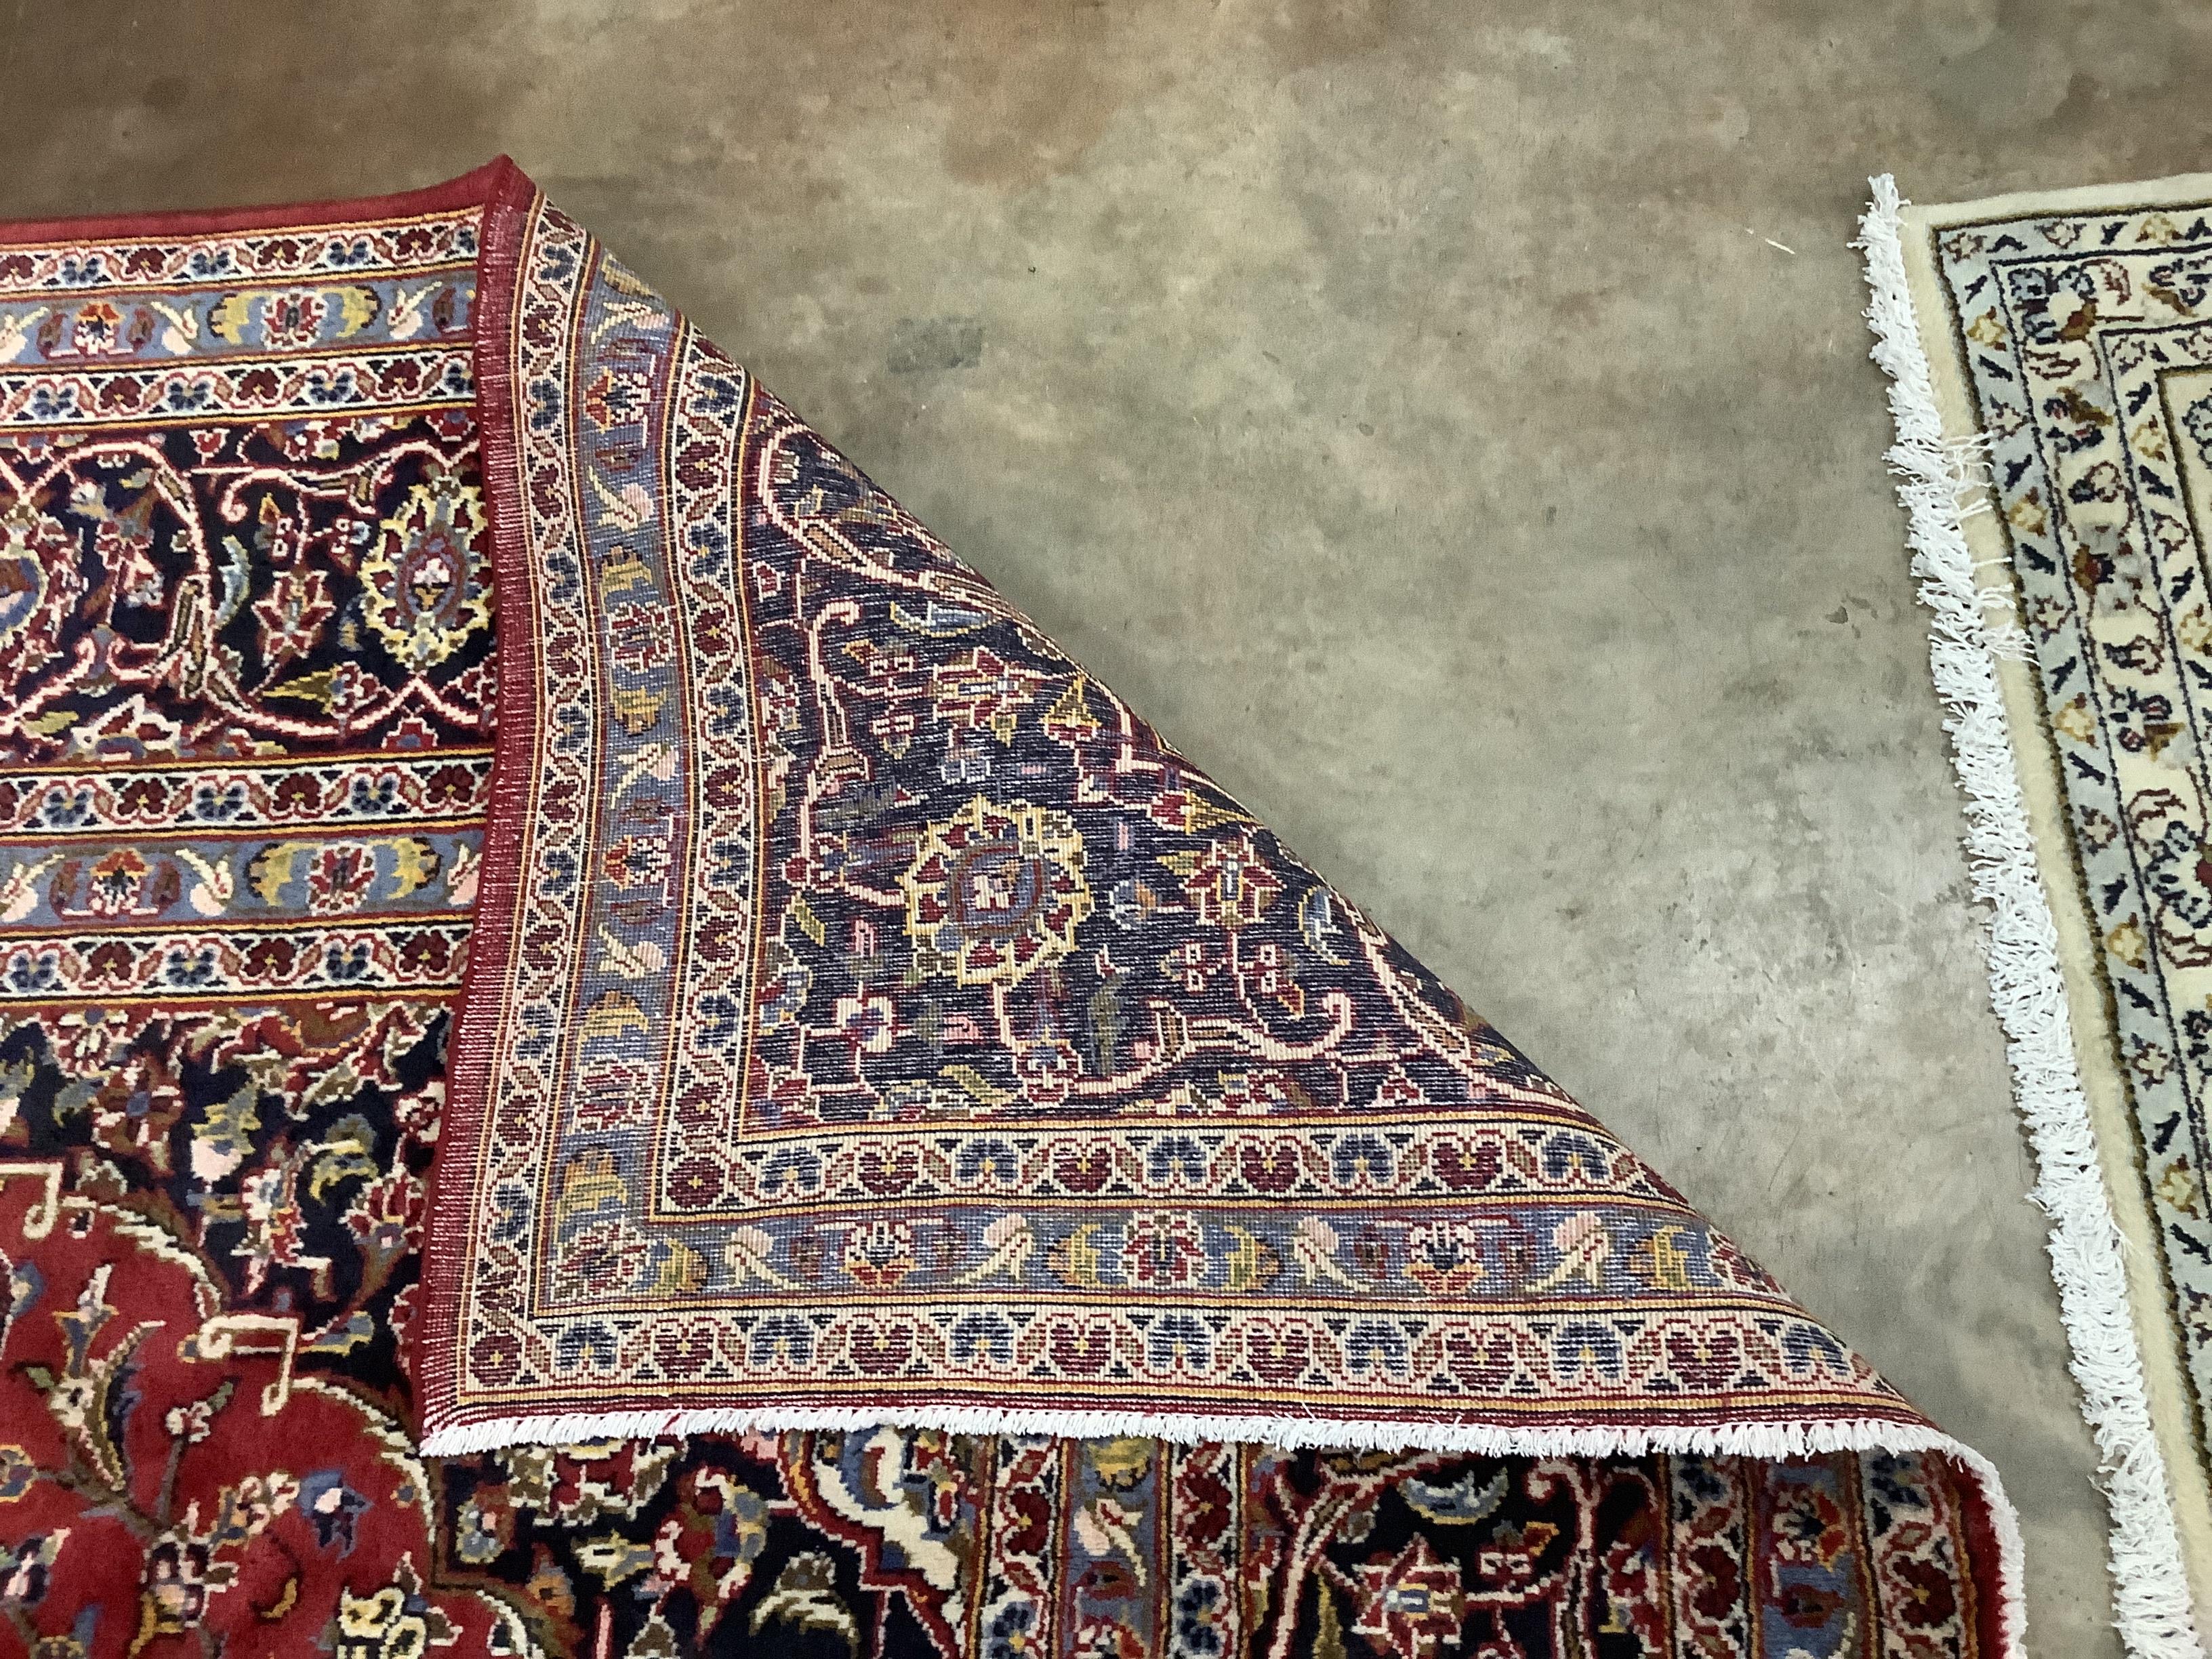 A Kashan red ground carpet, 355 x 240cm